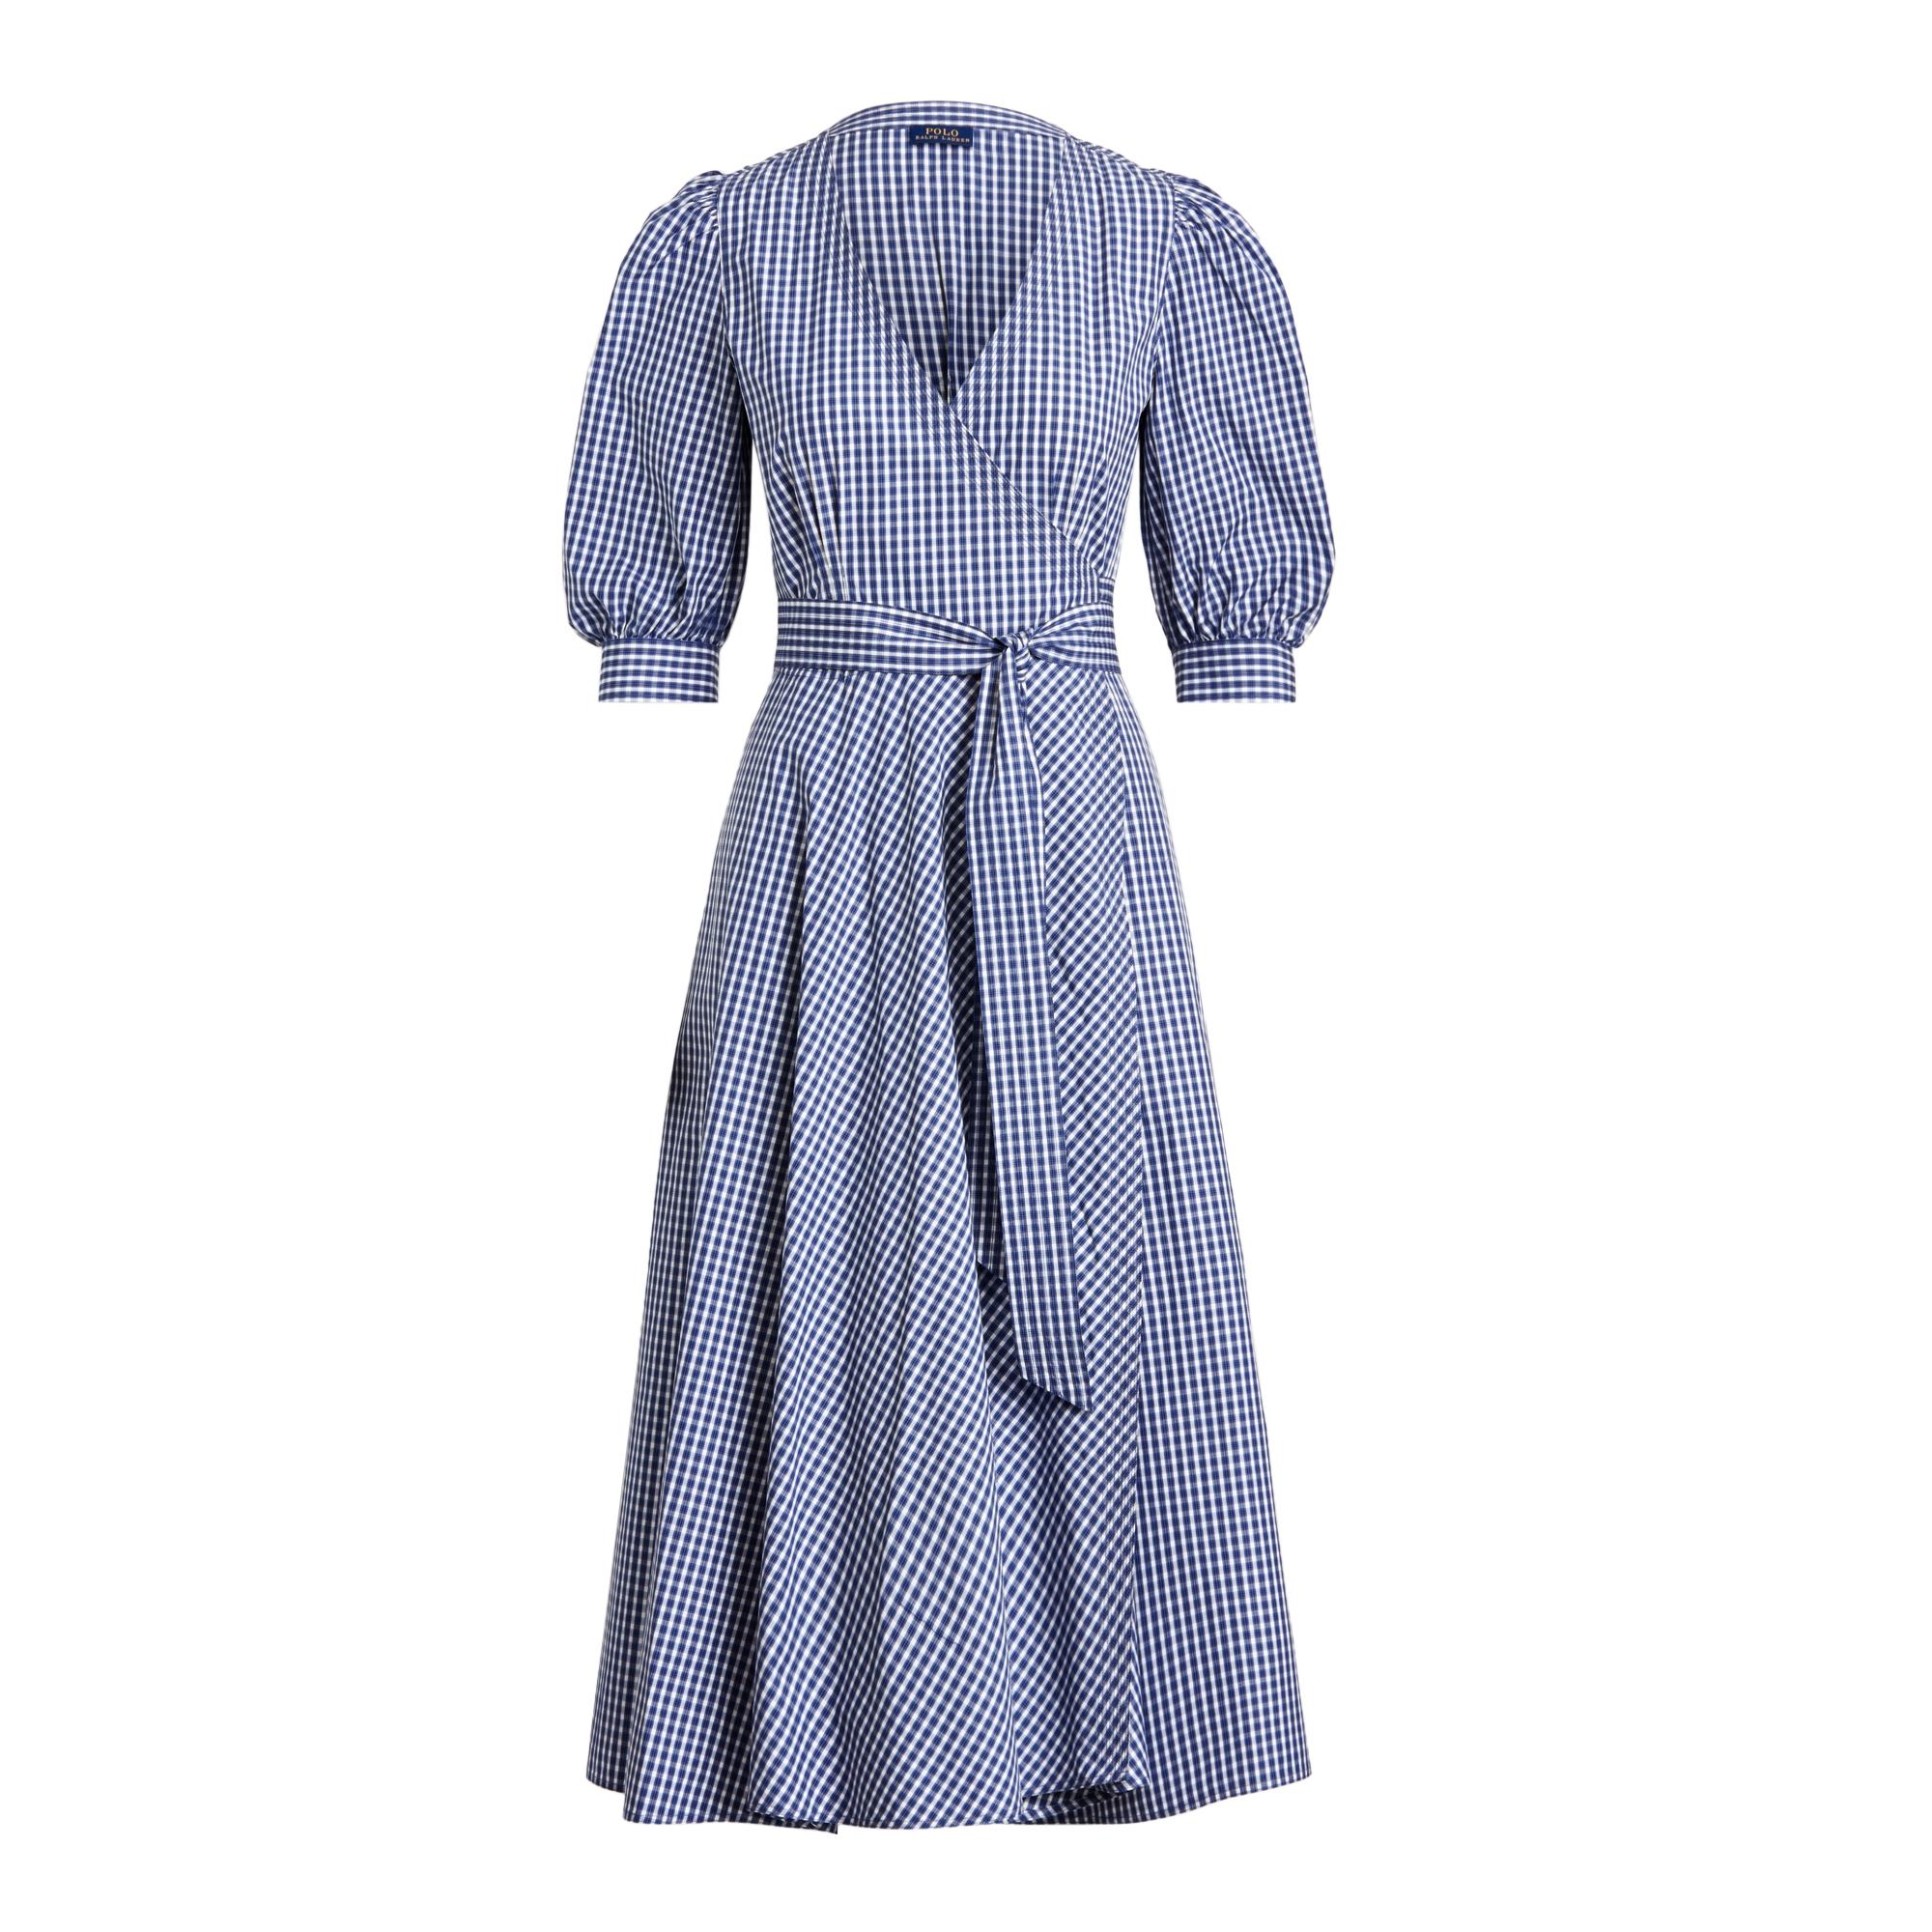 Ralph Lauren Gingham Cotton Wrap Dress in Blue - Lyst